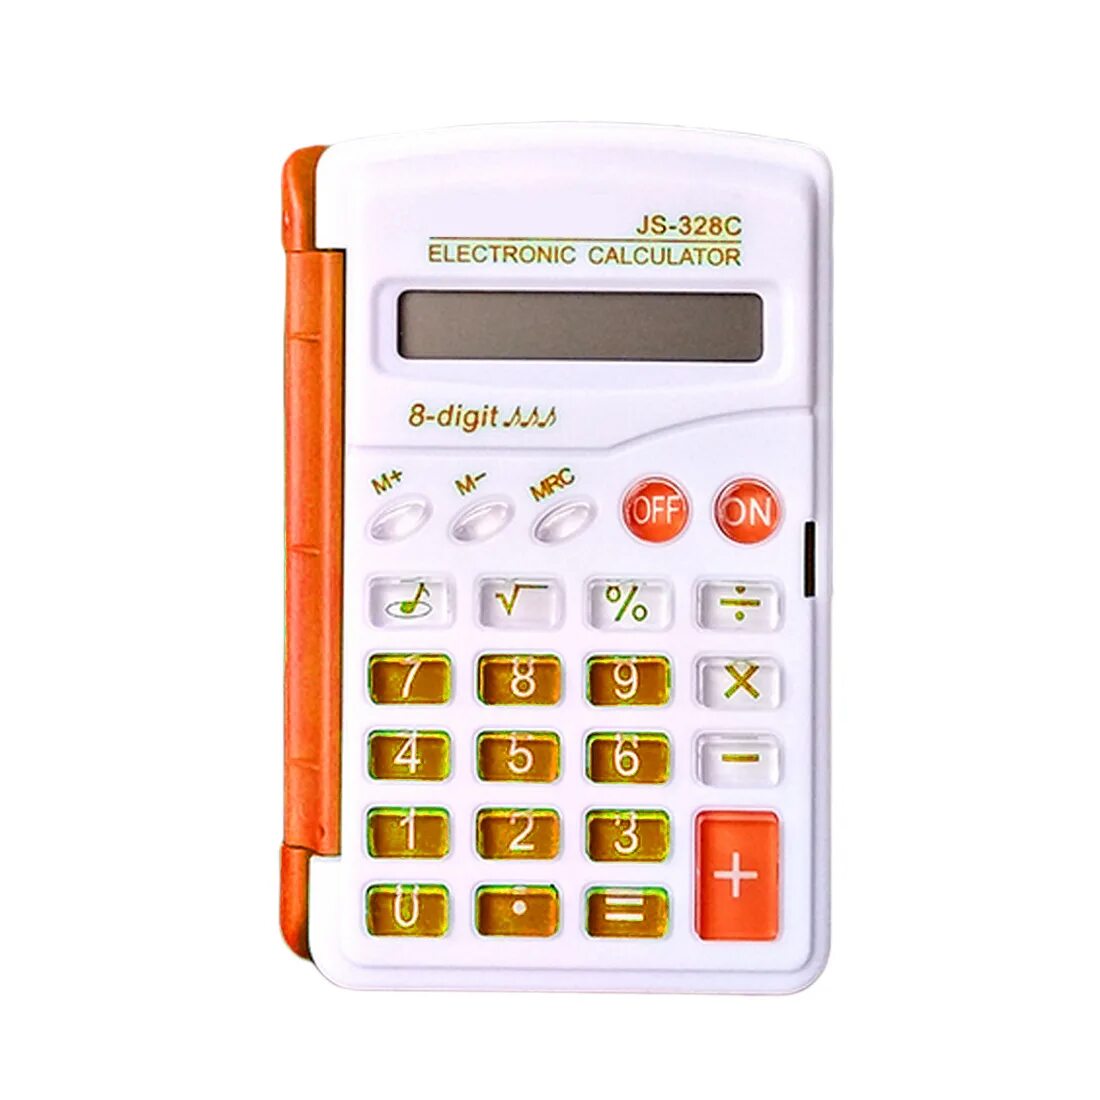 1 6 5 8 калькулятор. Electronic Mini calculator. Electronic calculator 8 Digit кармальный. Electronic Mini calculator 842 Тип питания. Mini calculator 2.